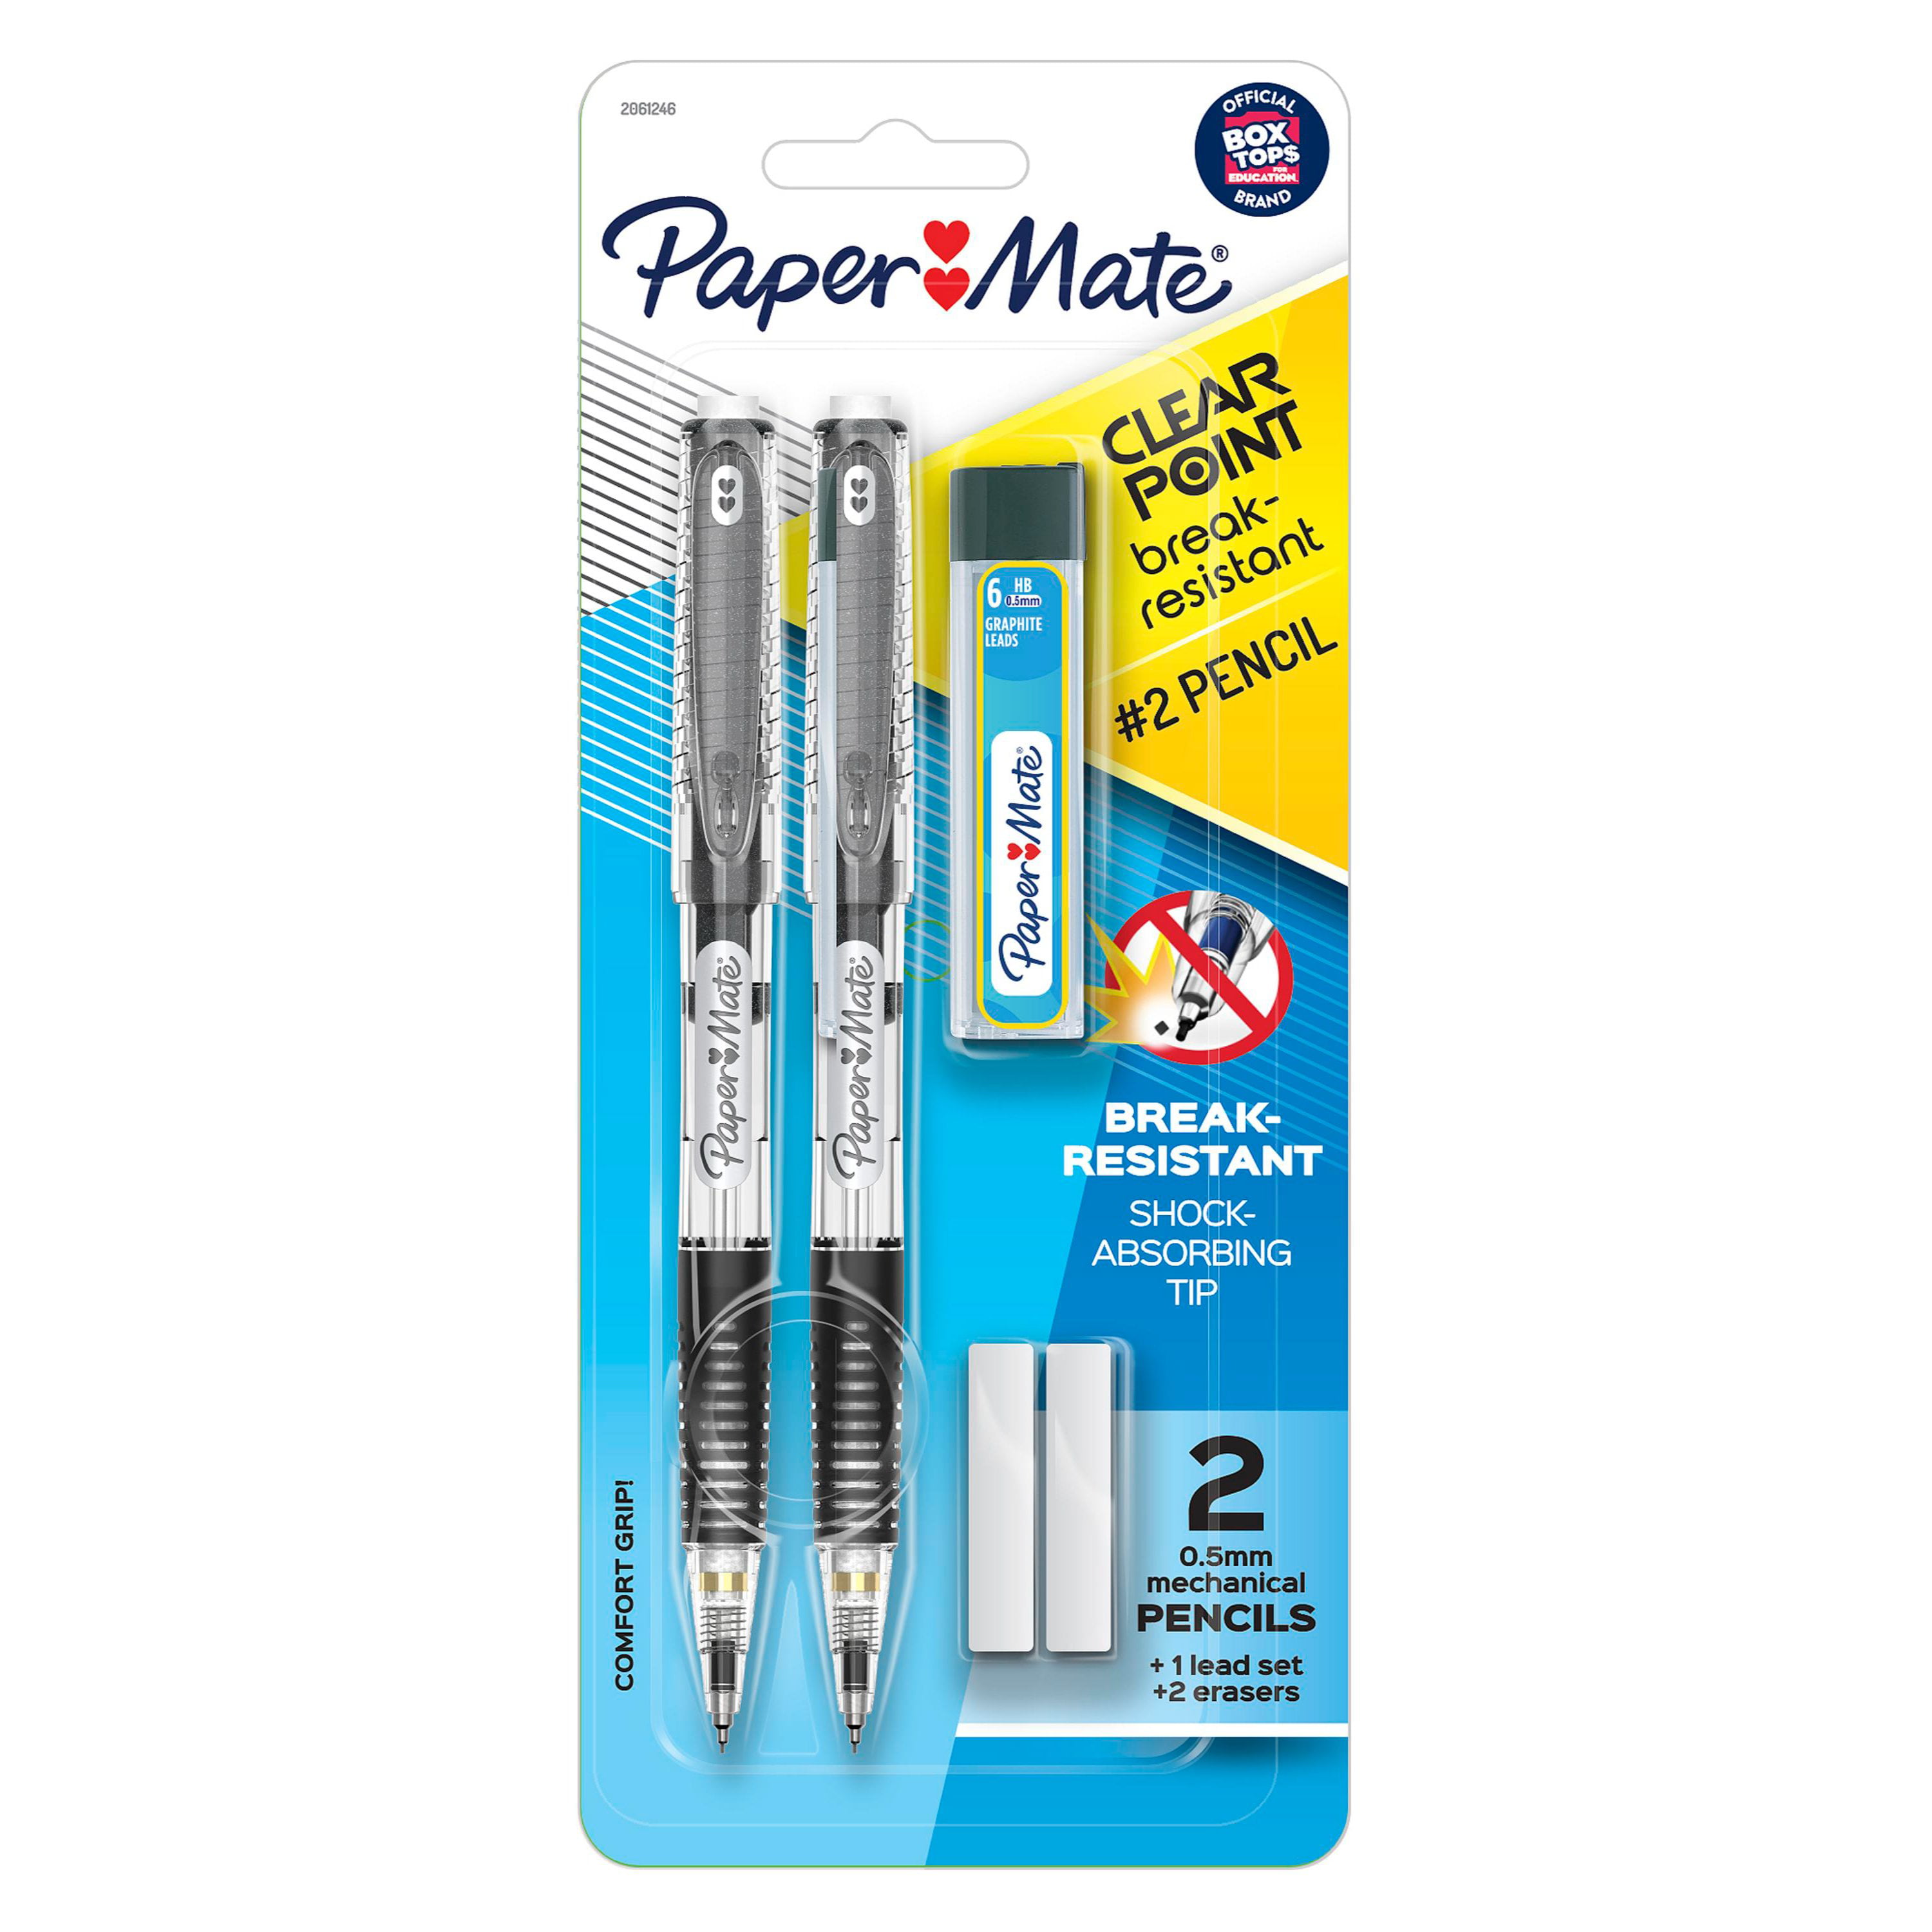 Total 60 leads Japanese Stationery Original Package. uni Mechanical Pencil Lead Nano Dia 20 leads x 3 Packs 0.5mm, Blue